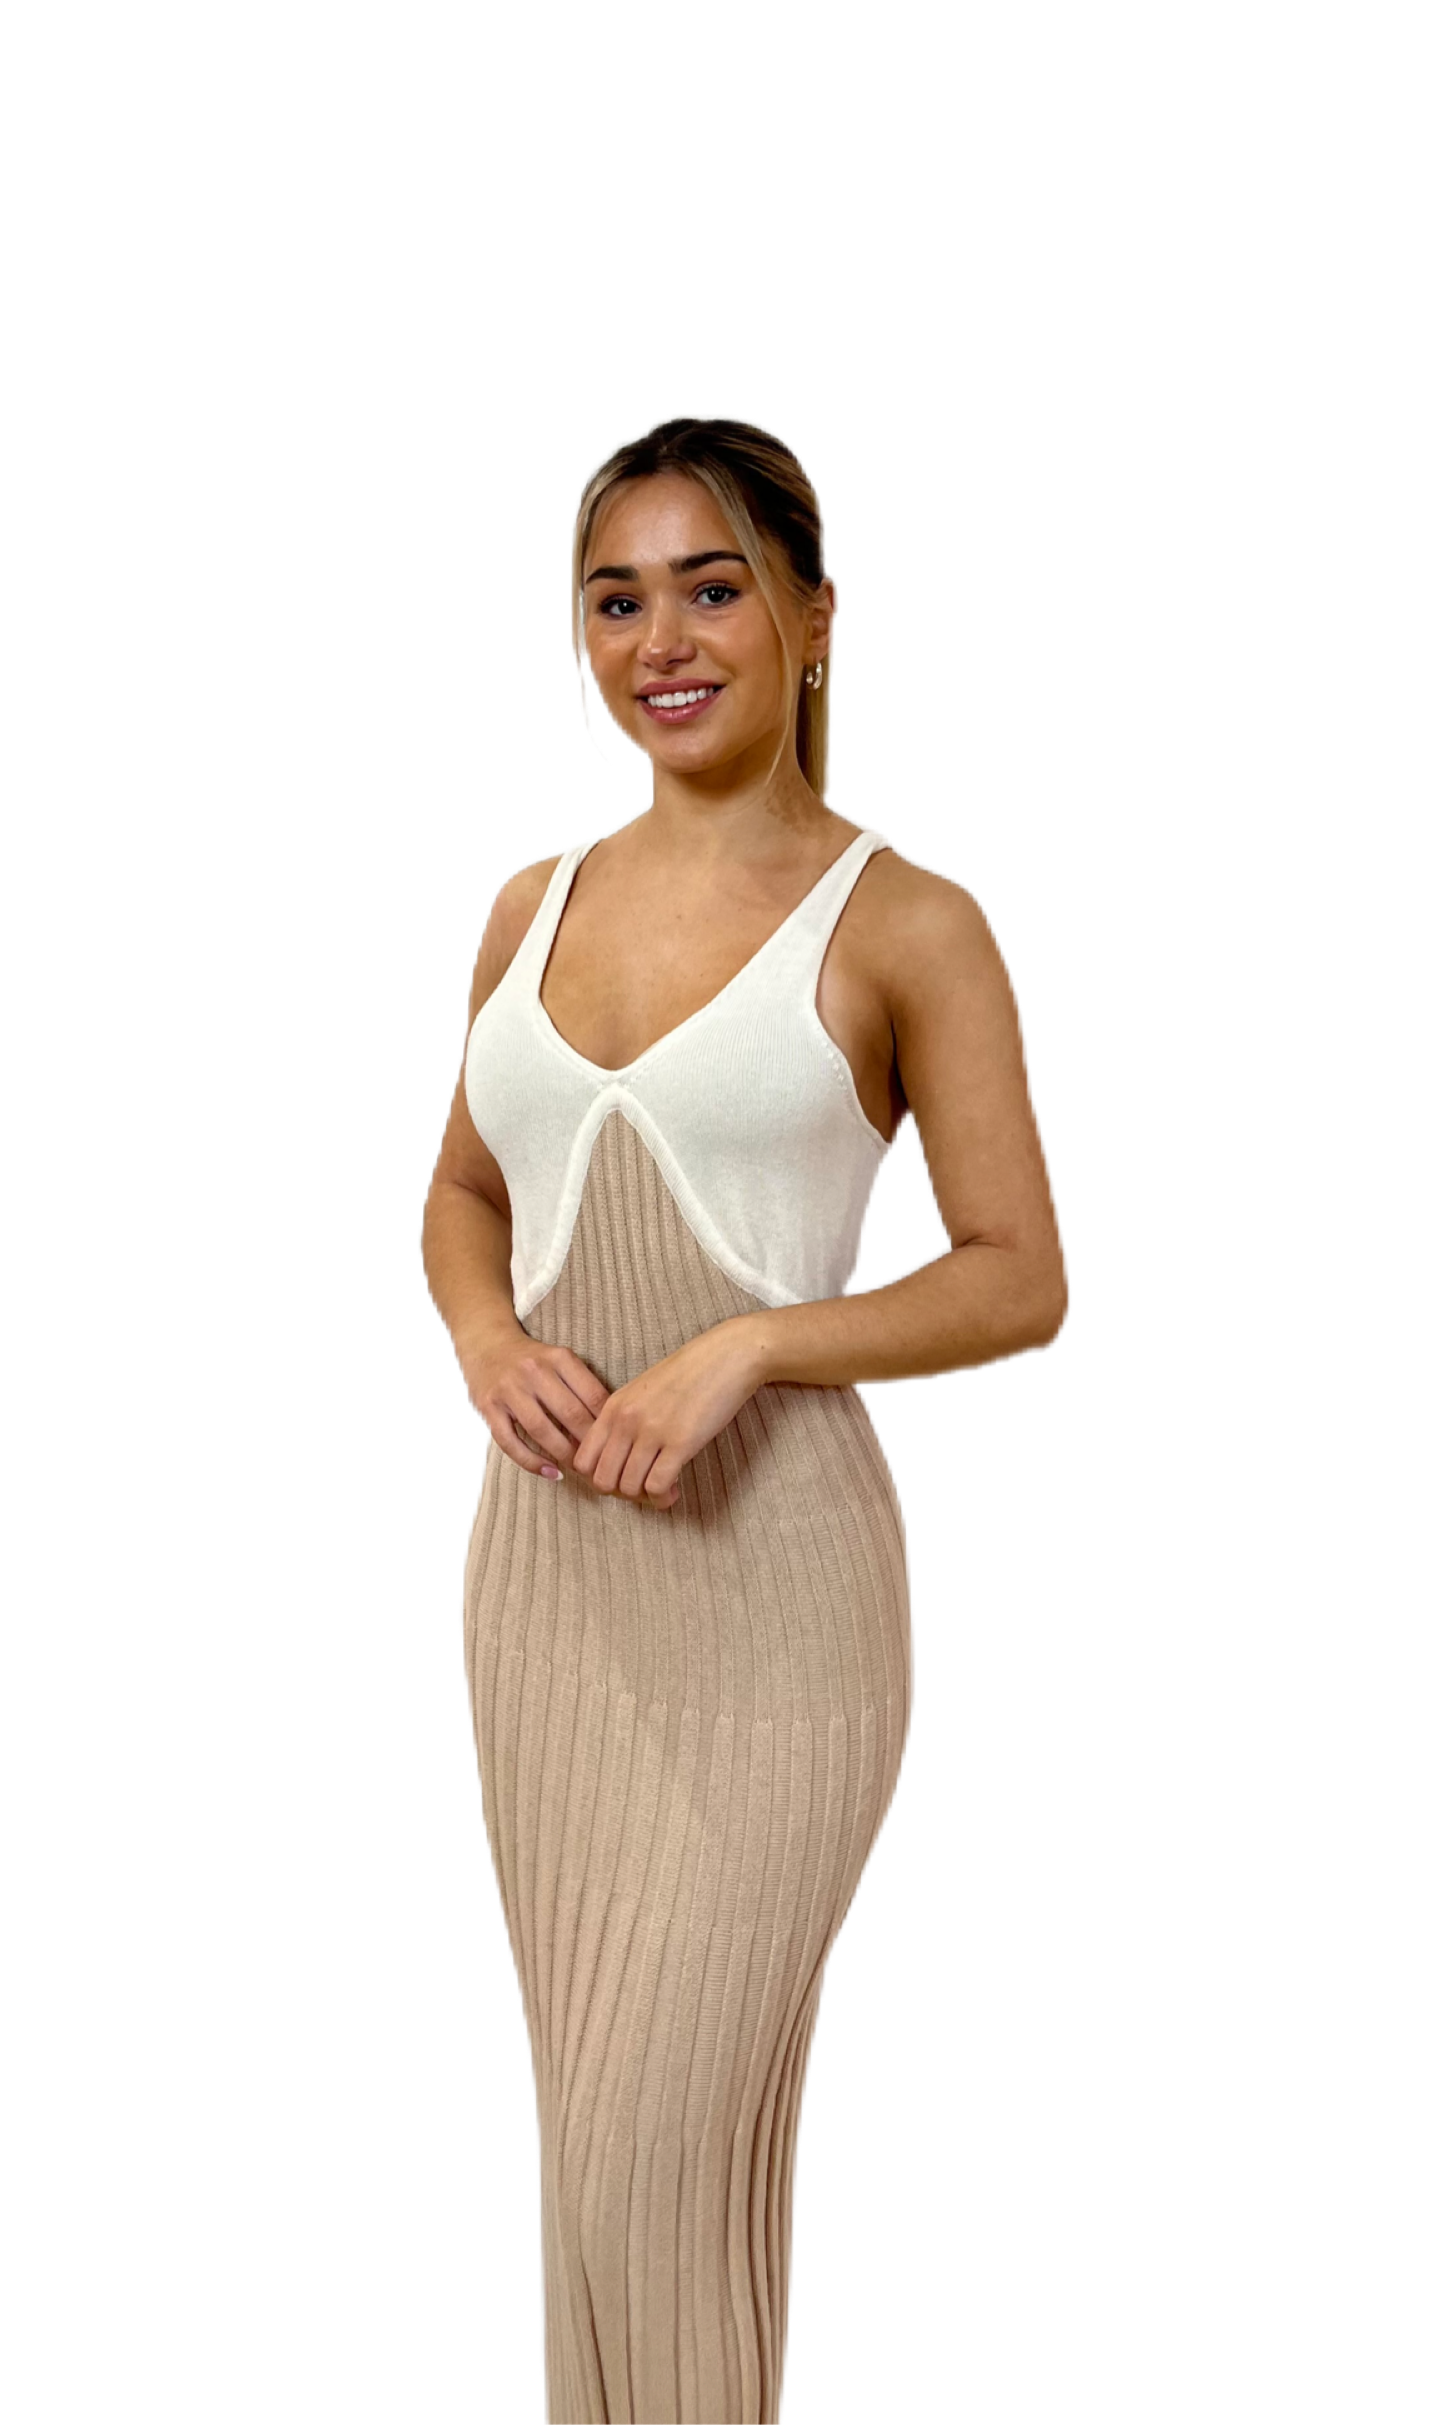 Andean Knit Beige & White Maxi Dress. Size: S/M